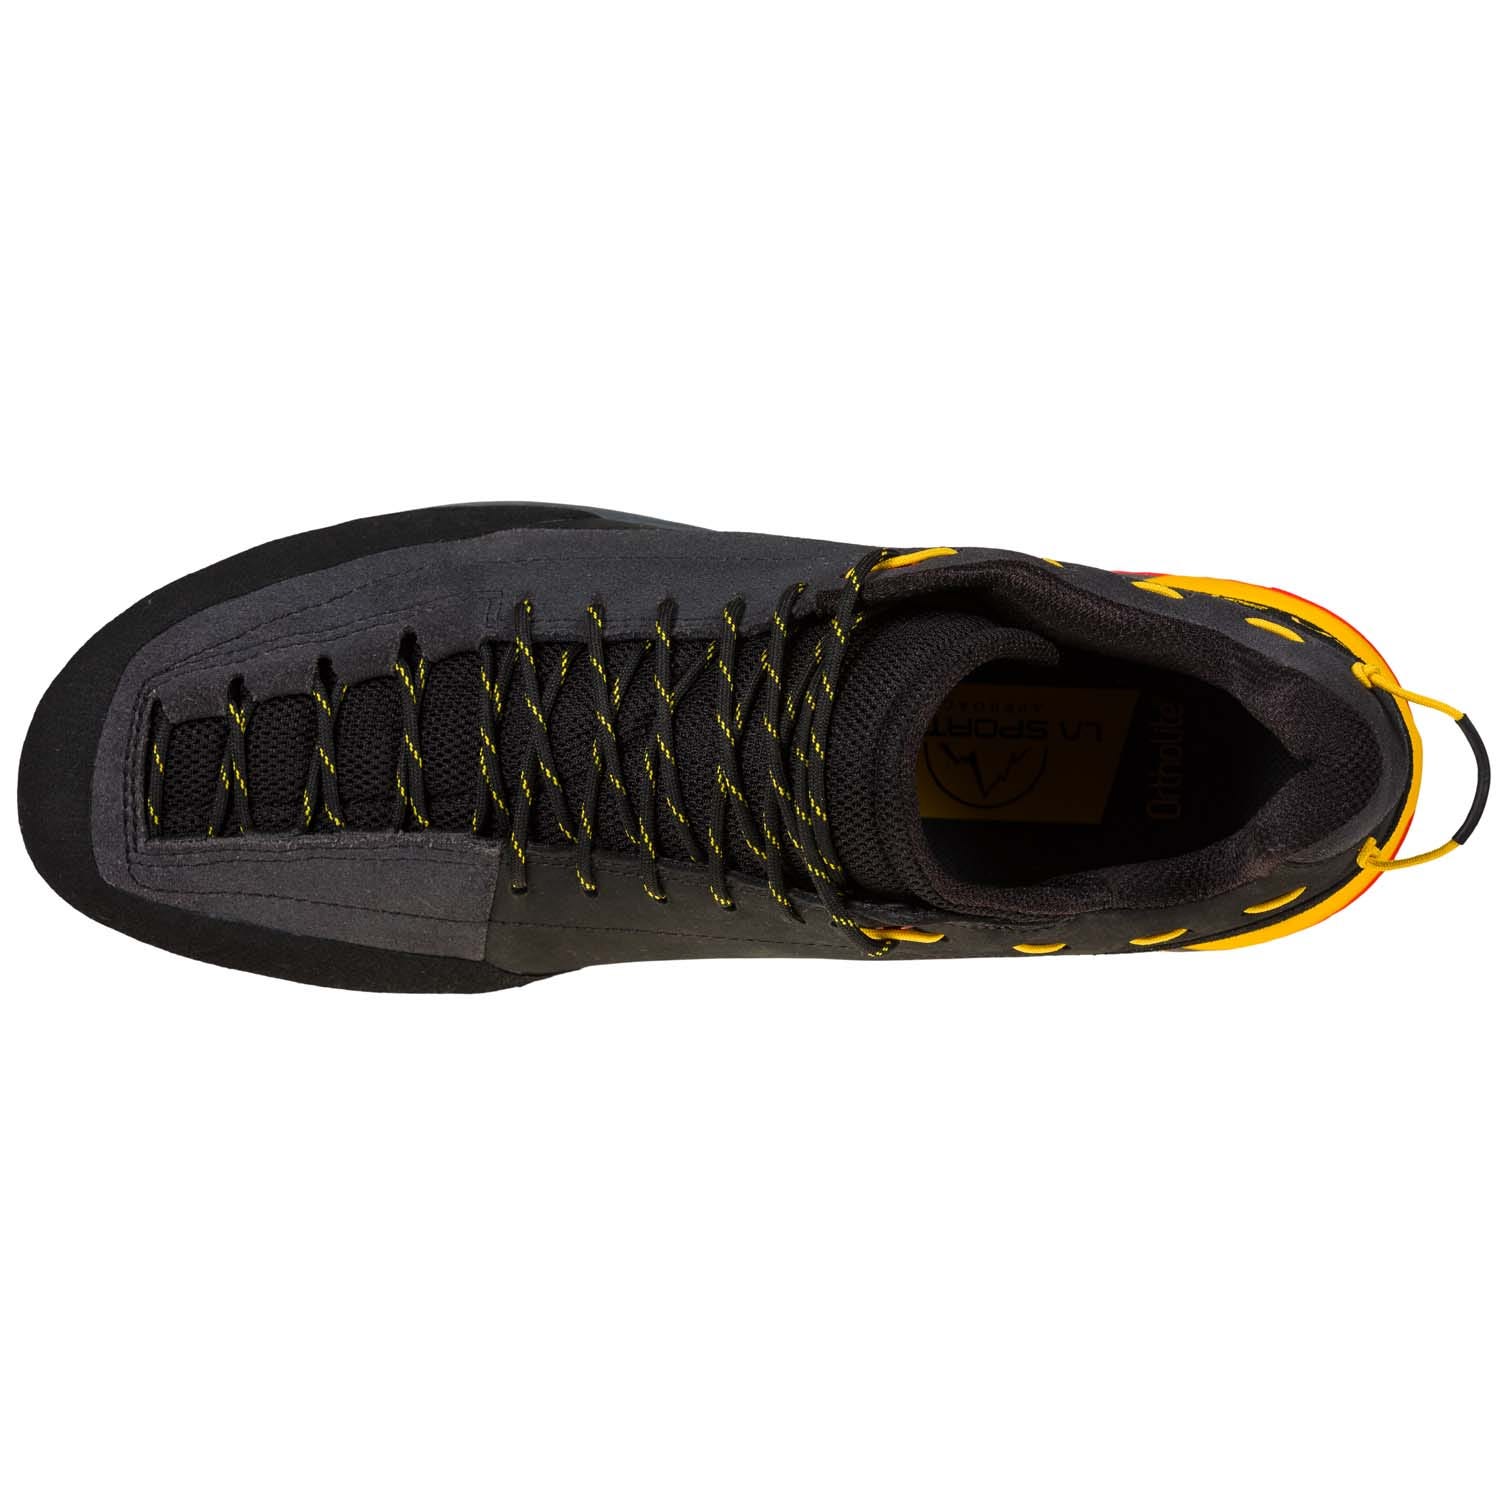 La Sportiva "TX Guide Leather" - carbon/yellow